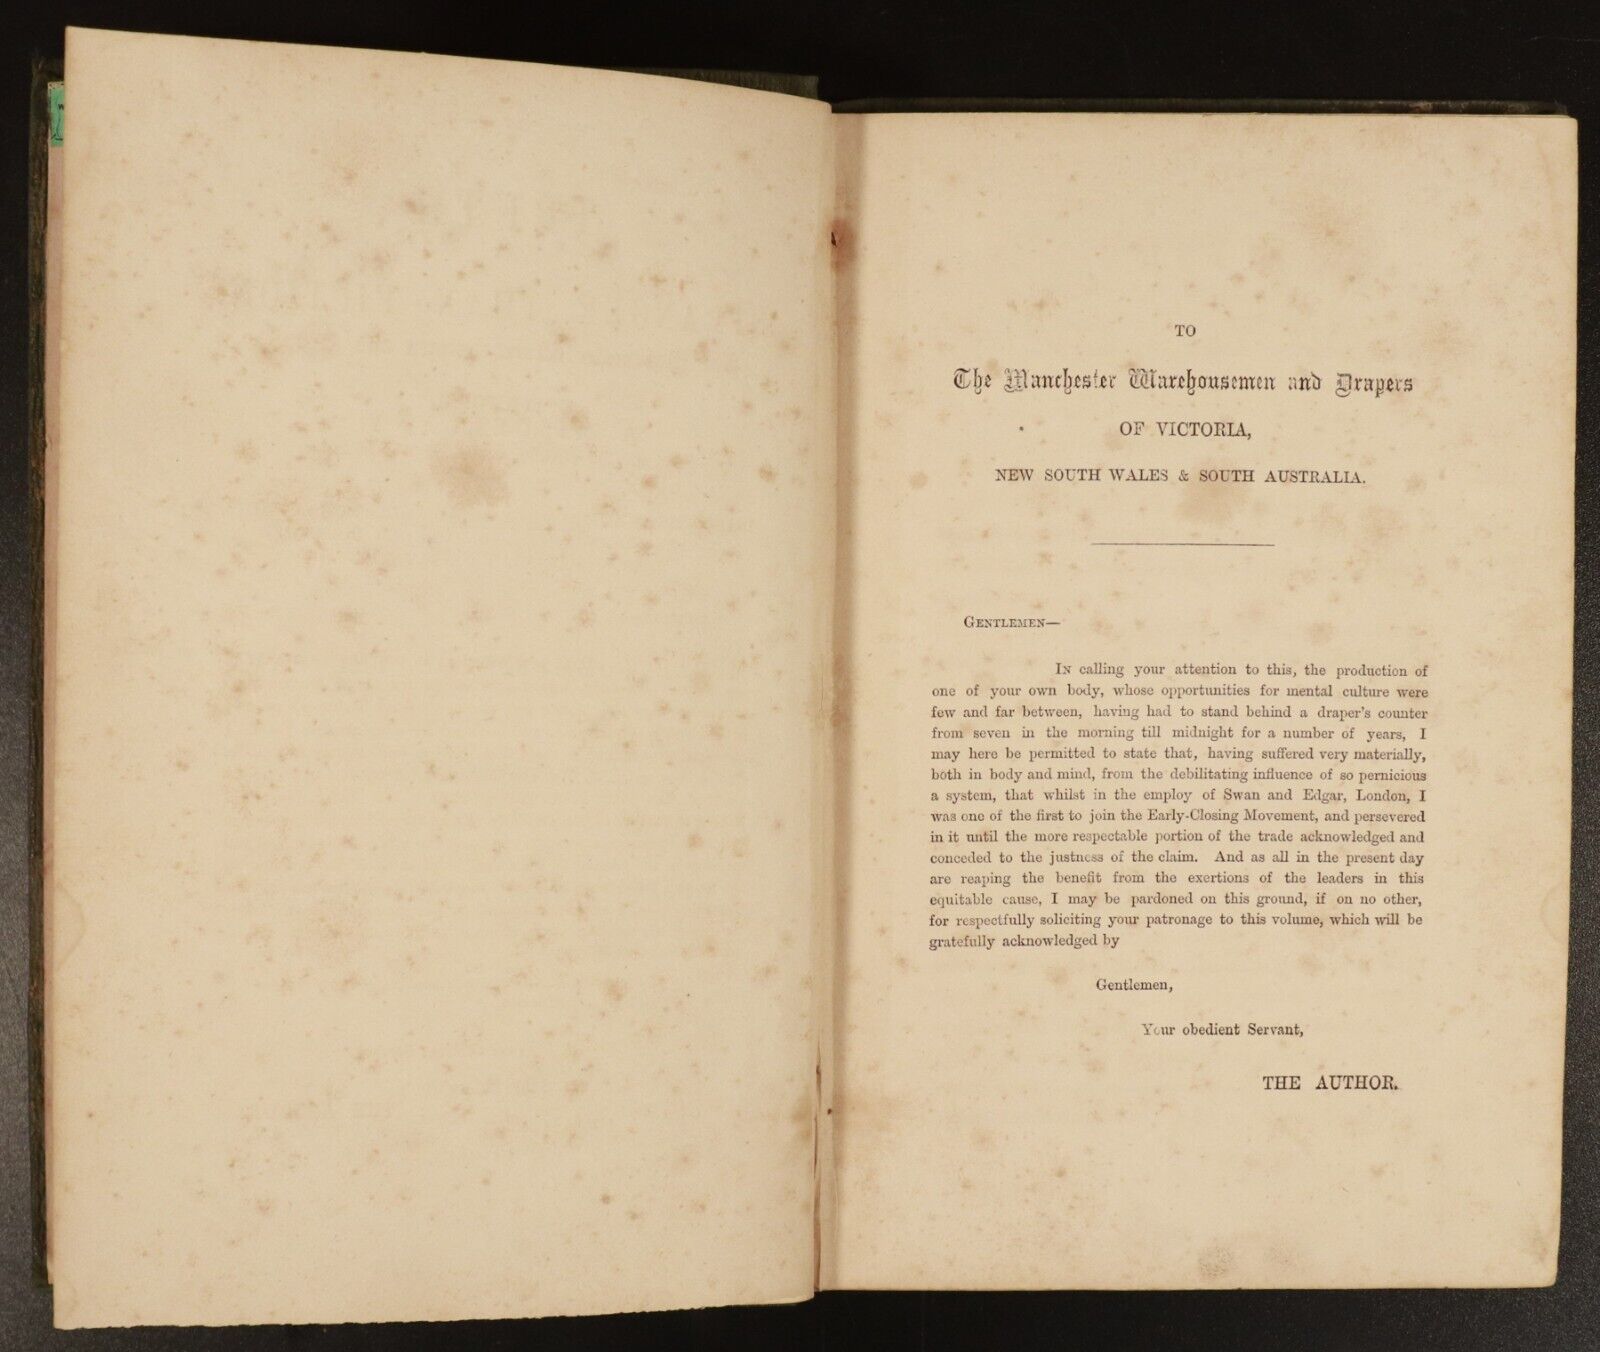 1861 Truth Stranger Than Fiction by W.A.C Robinson Antiquarian Australian Book